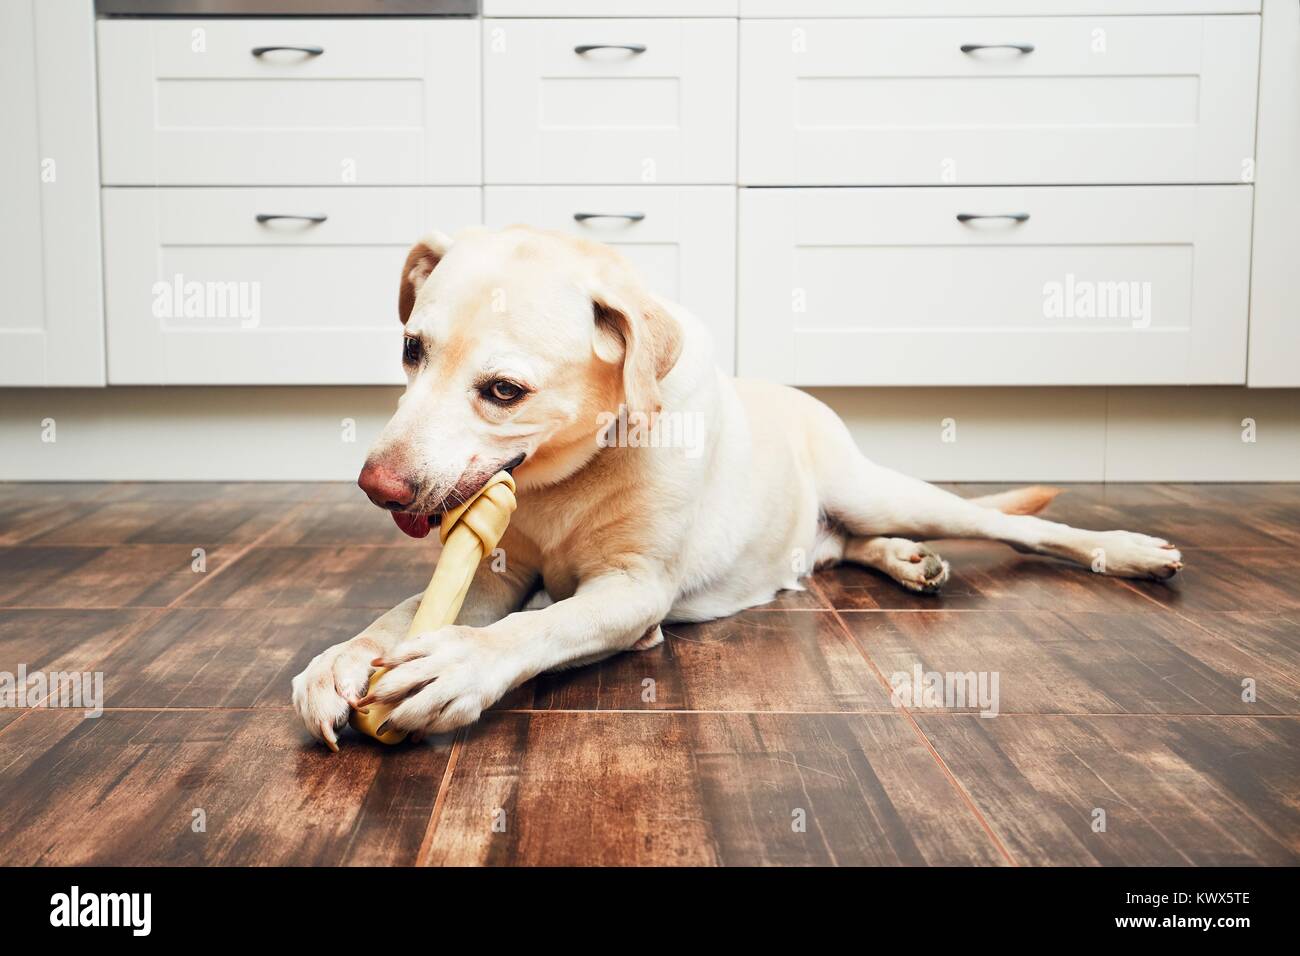 Dog with bone. Cheerful labrador retriever biting large bone for dental heath in the home kitchen. Stock Photo